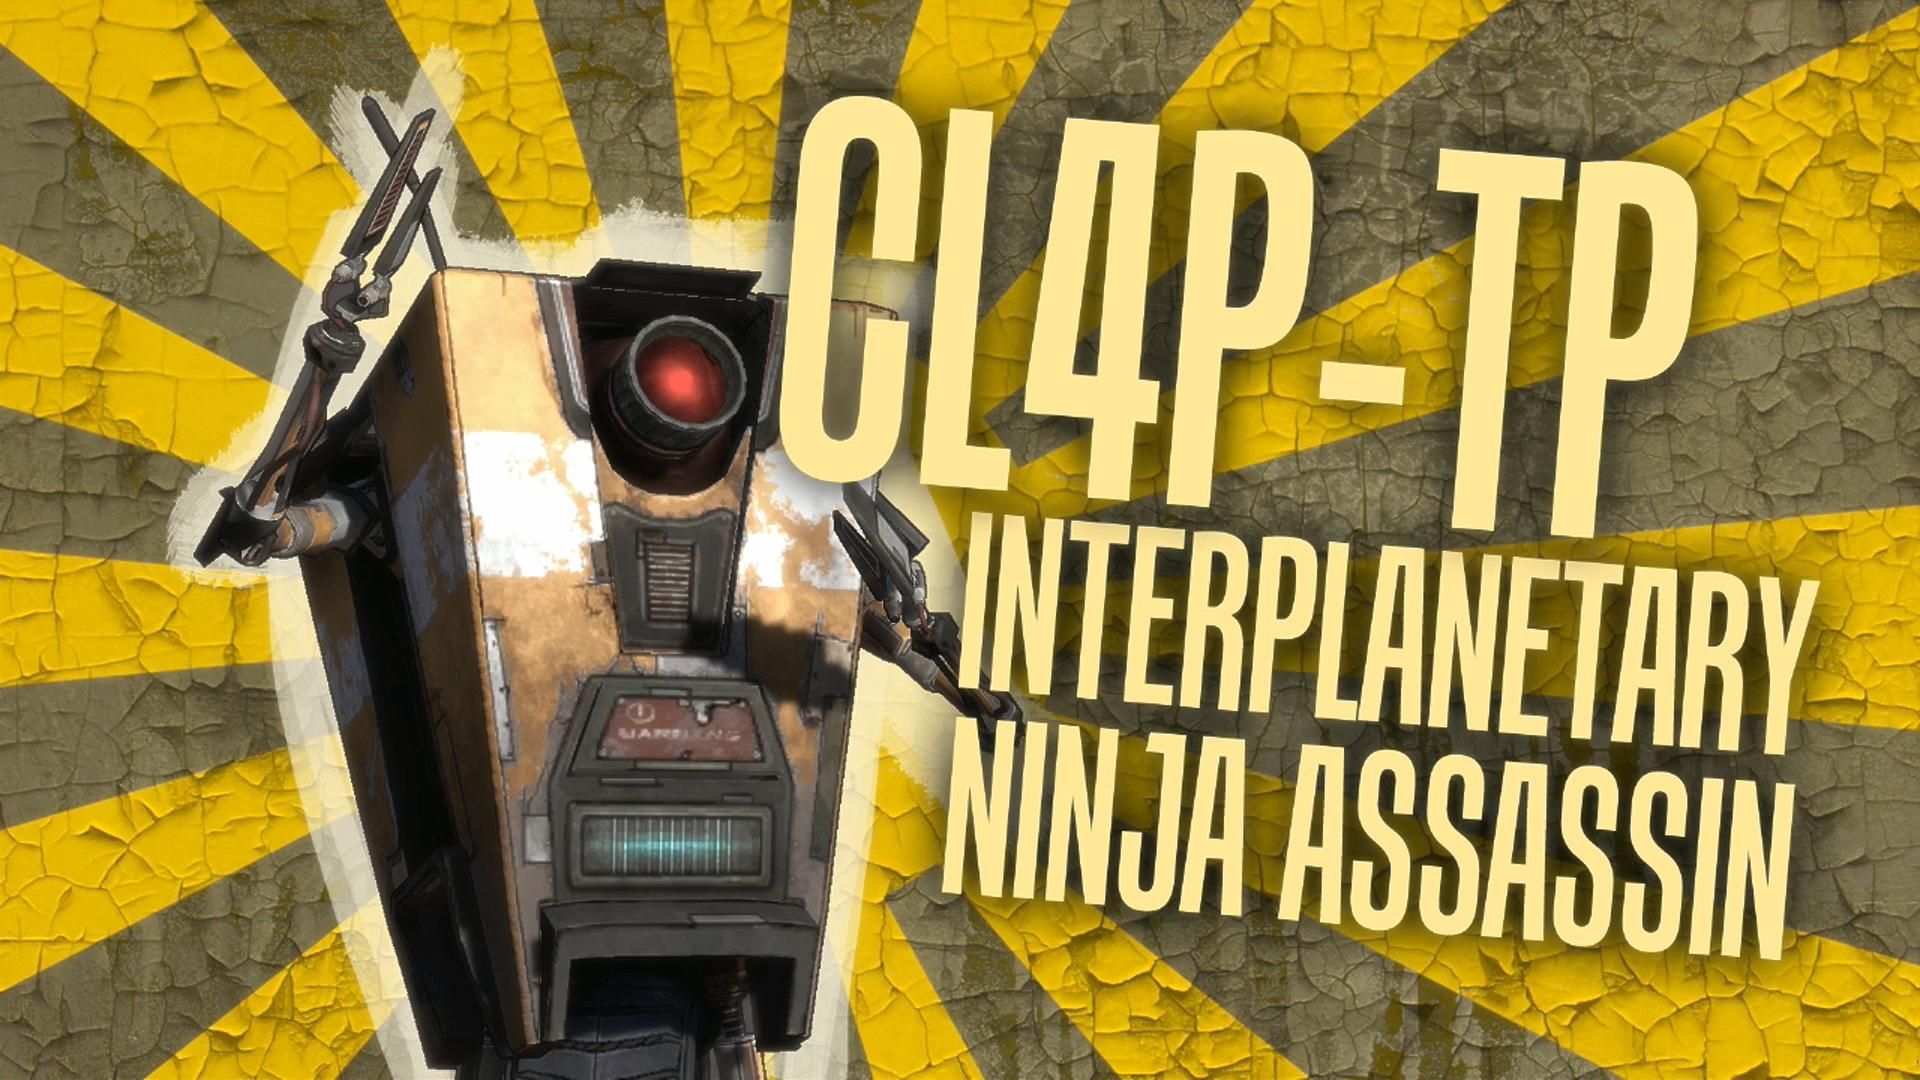 borderlands claptrap - 0 IpTp Interplanetary Ninja Assassin